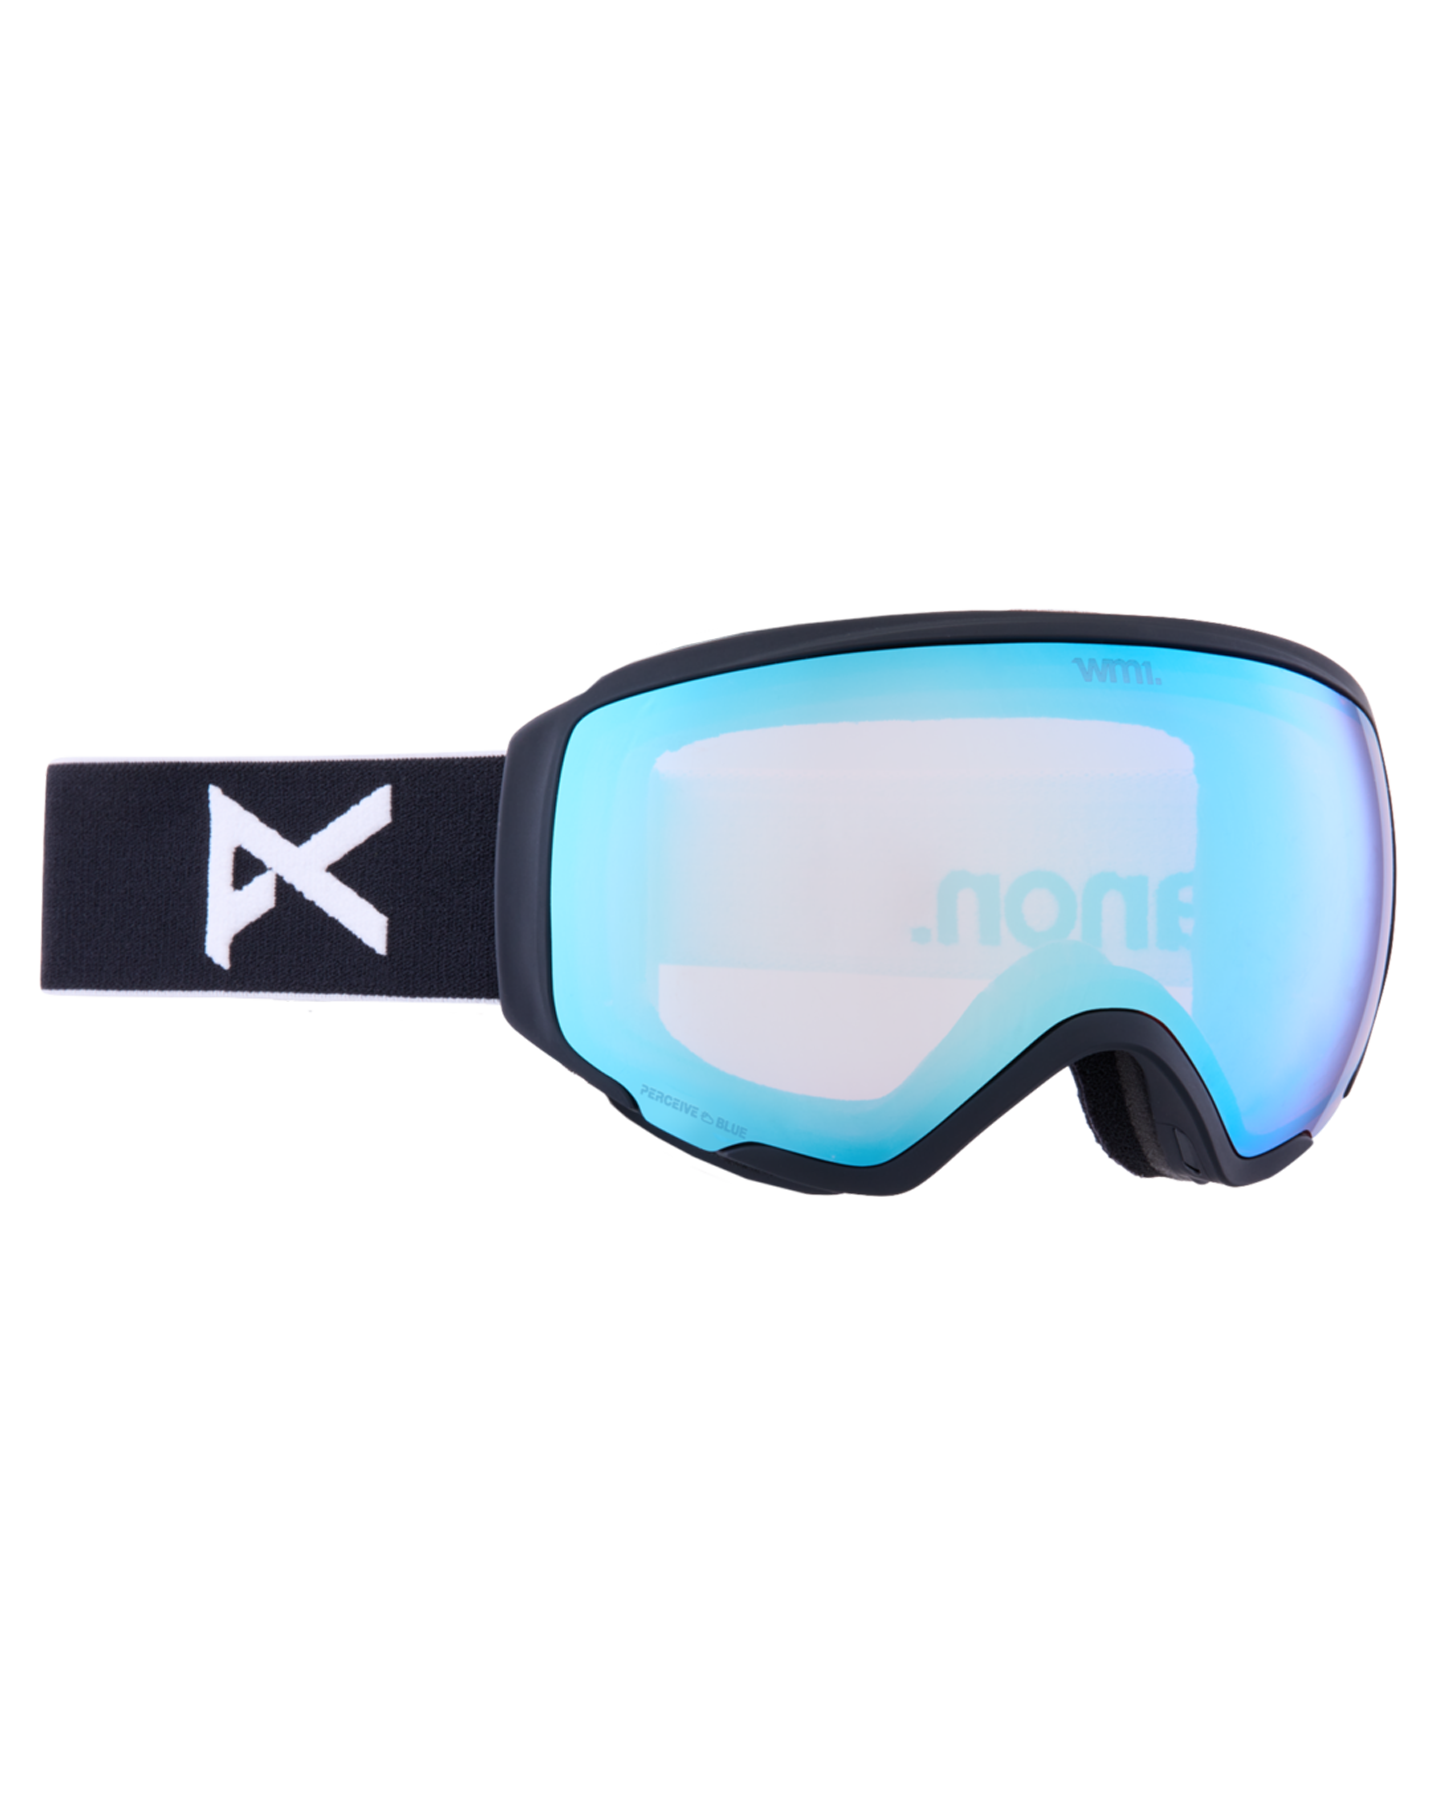 Anon WM1 Low Bridge Fit Snow Goggles + Bonus Lens + MFI - Black / Perceive Variable Blue Women's Snow Goggles - SnowSkiersWarehouse